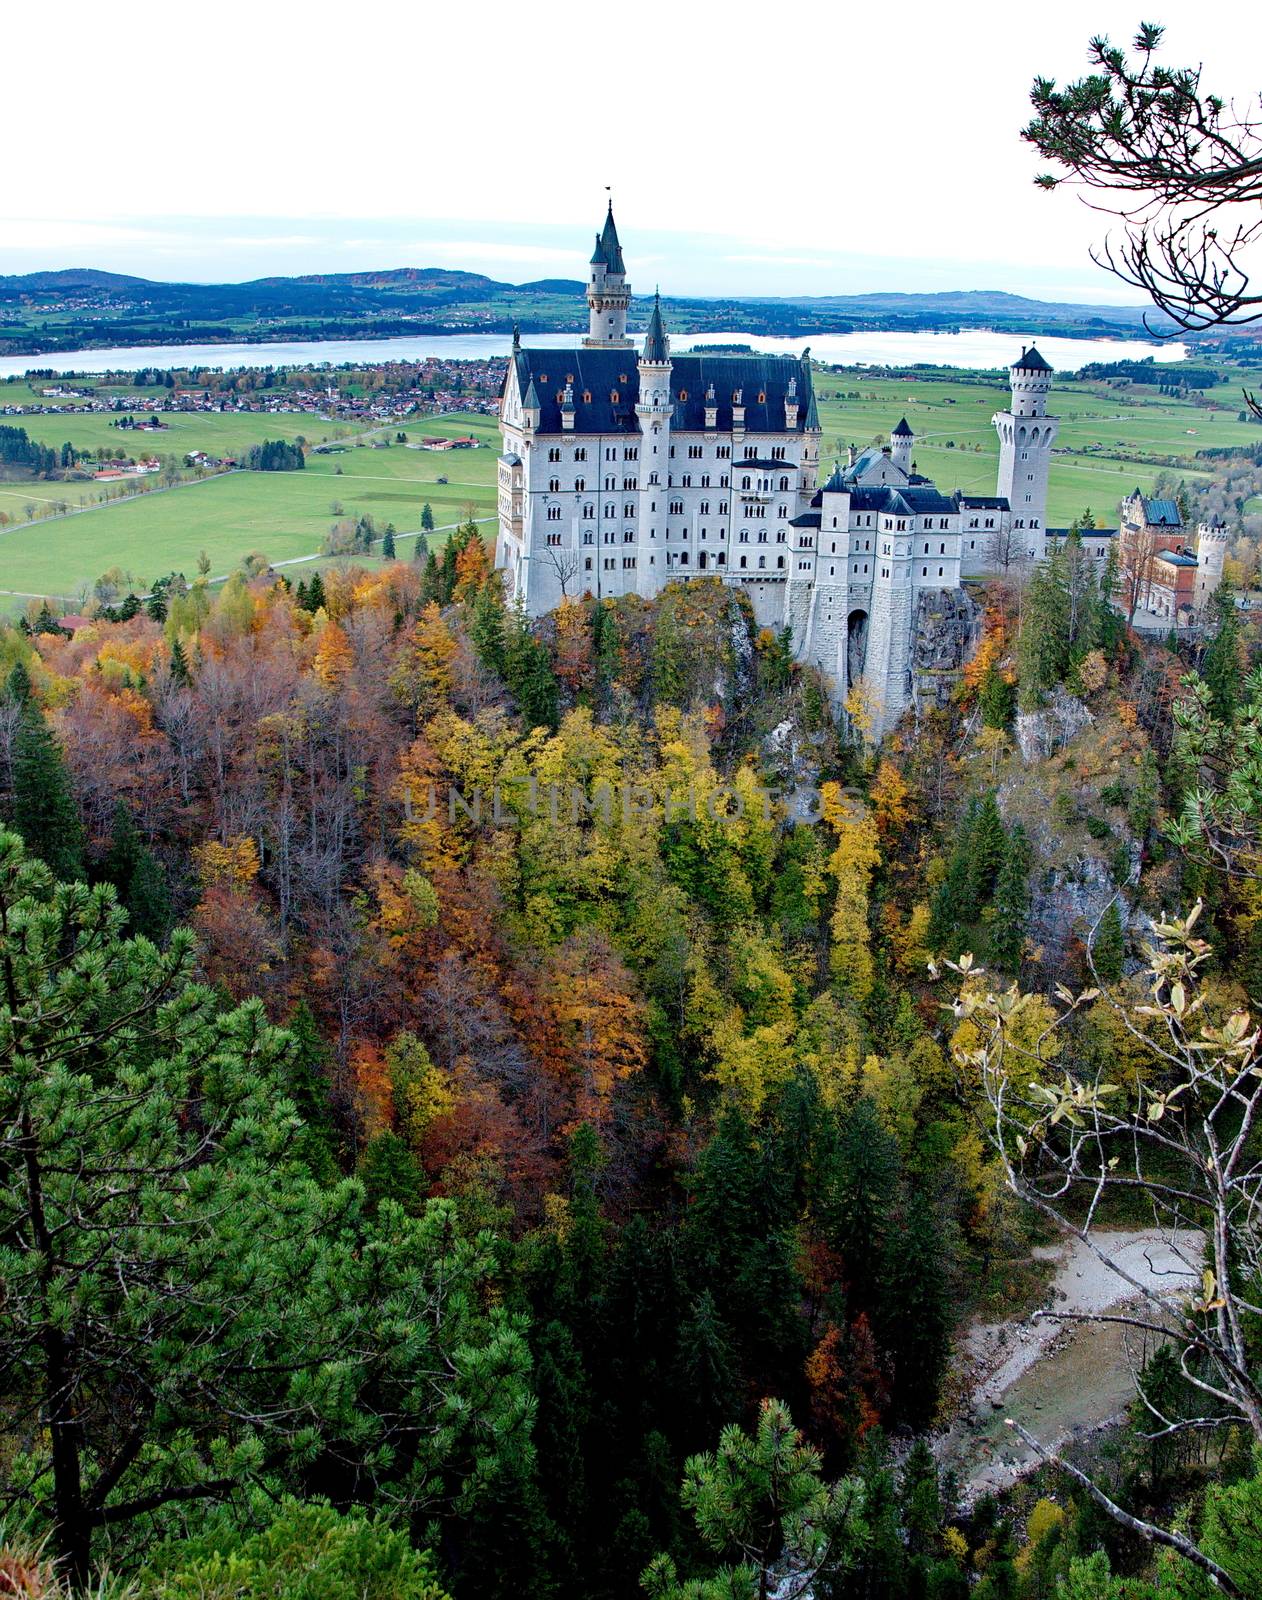 Castle of Neuschwanstein near Munich in Germany on an autumn day by anderm